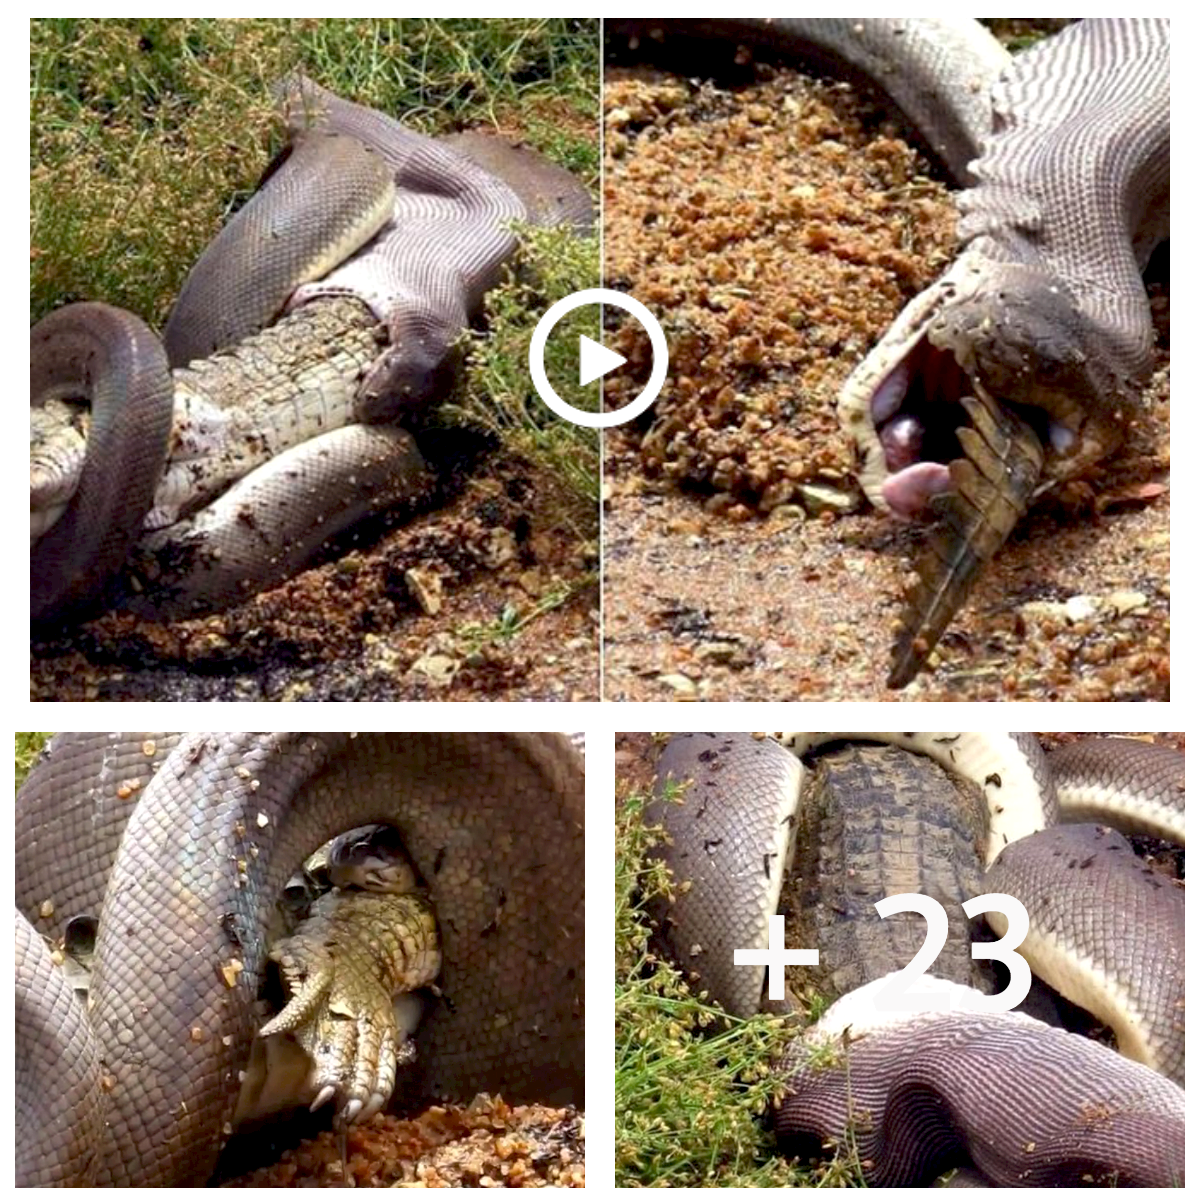 See A Python Swallowing An Aᴜsᴛʀᴀʟɪᴀn Freshwater Crocodile Whole